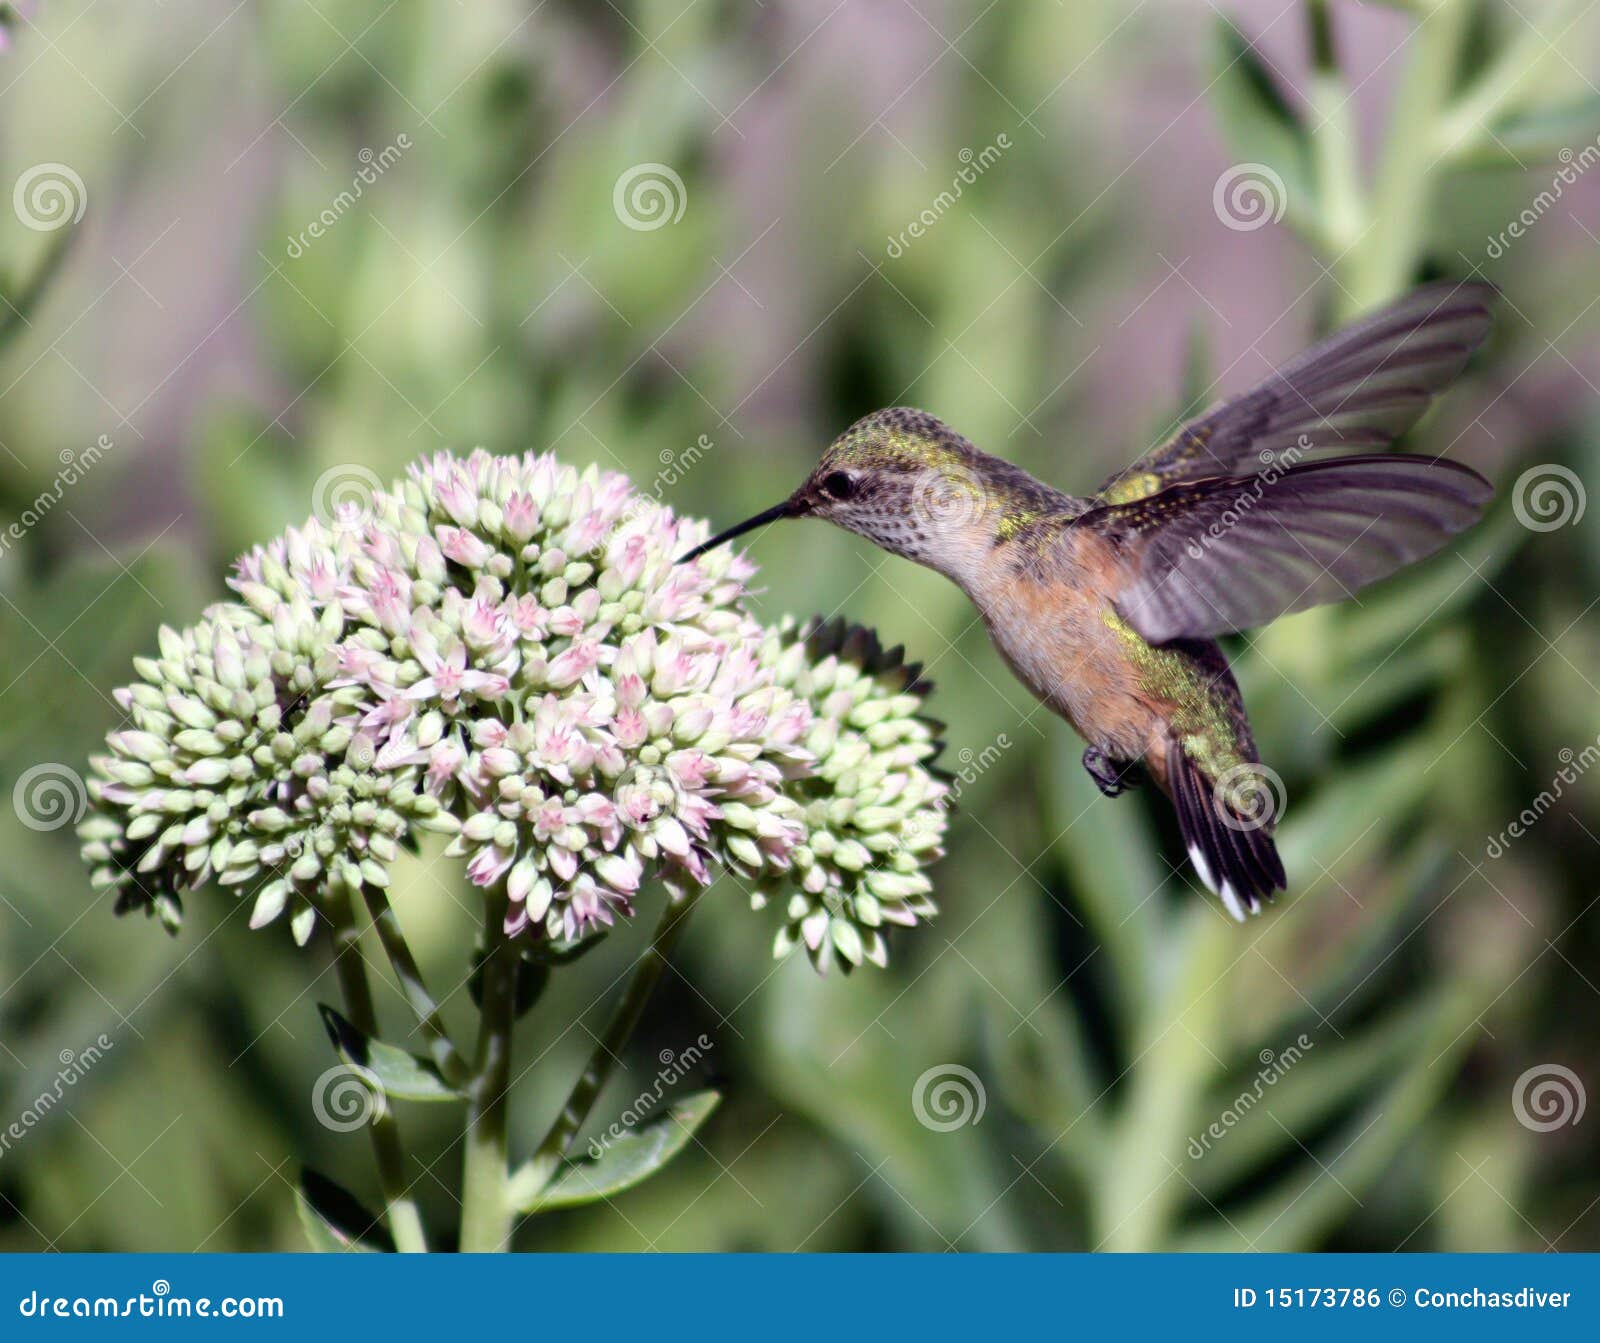 broad-tailed hummingbird